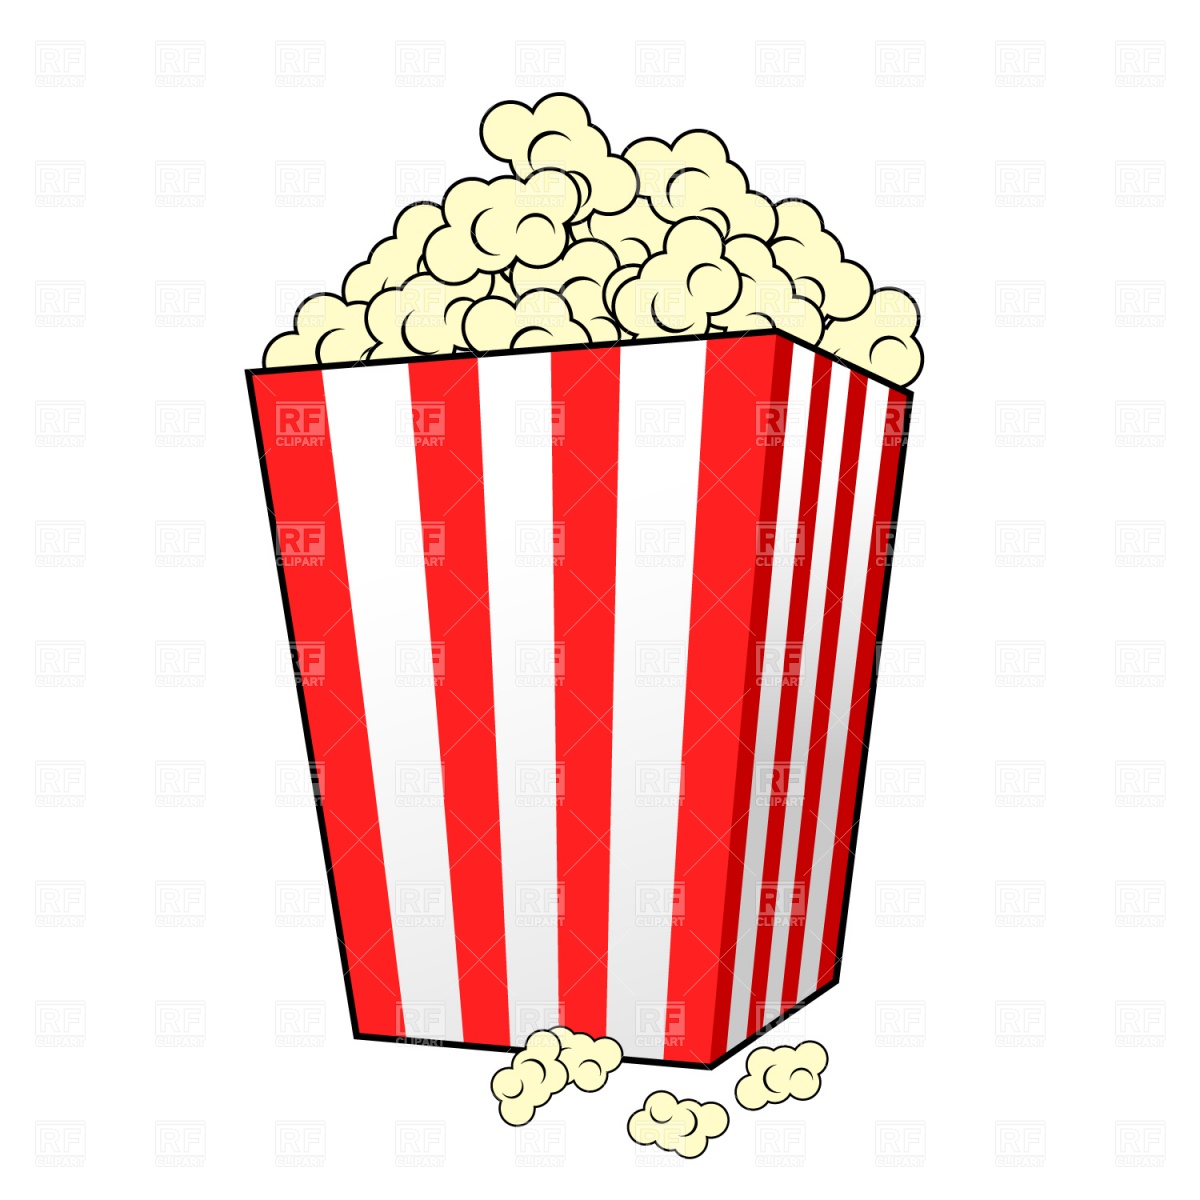 Popcorn clipart images